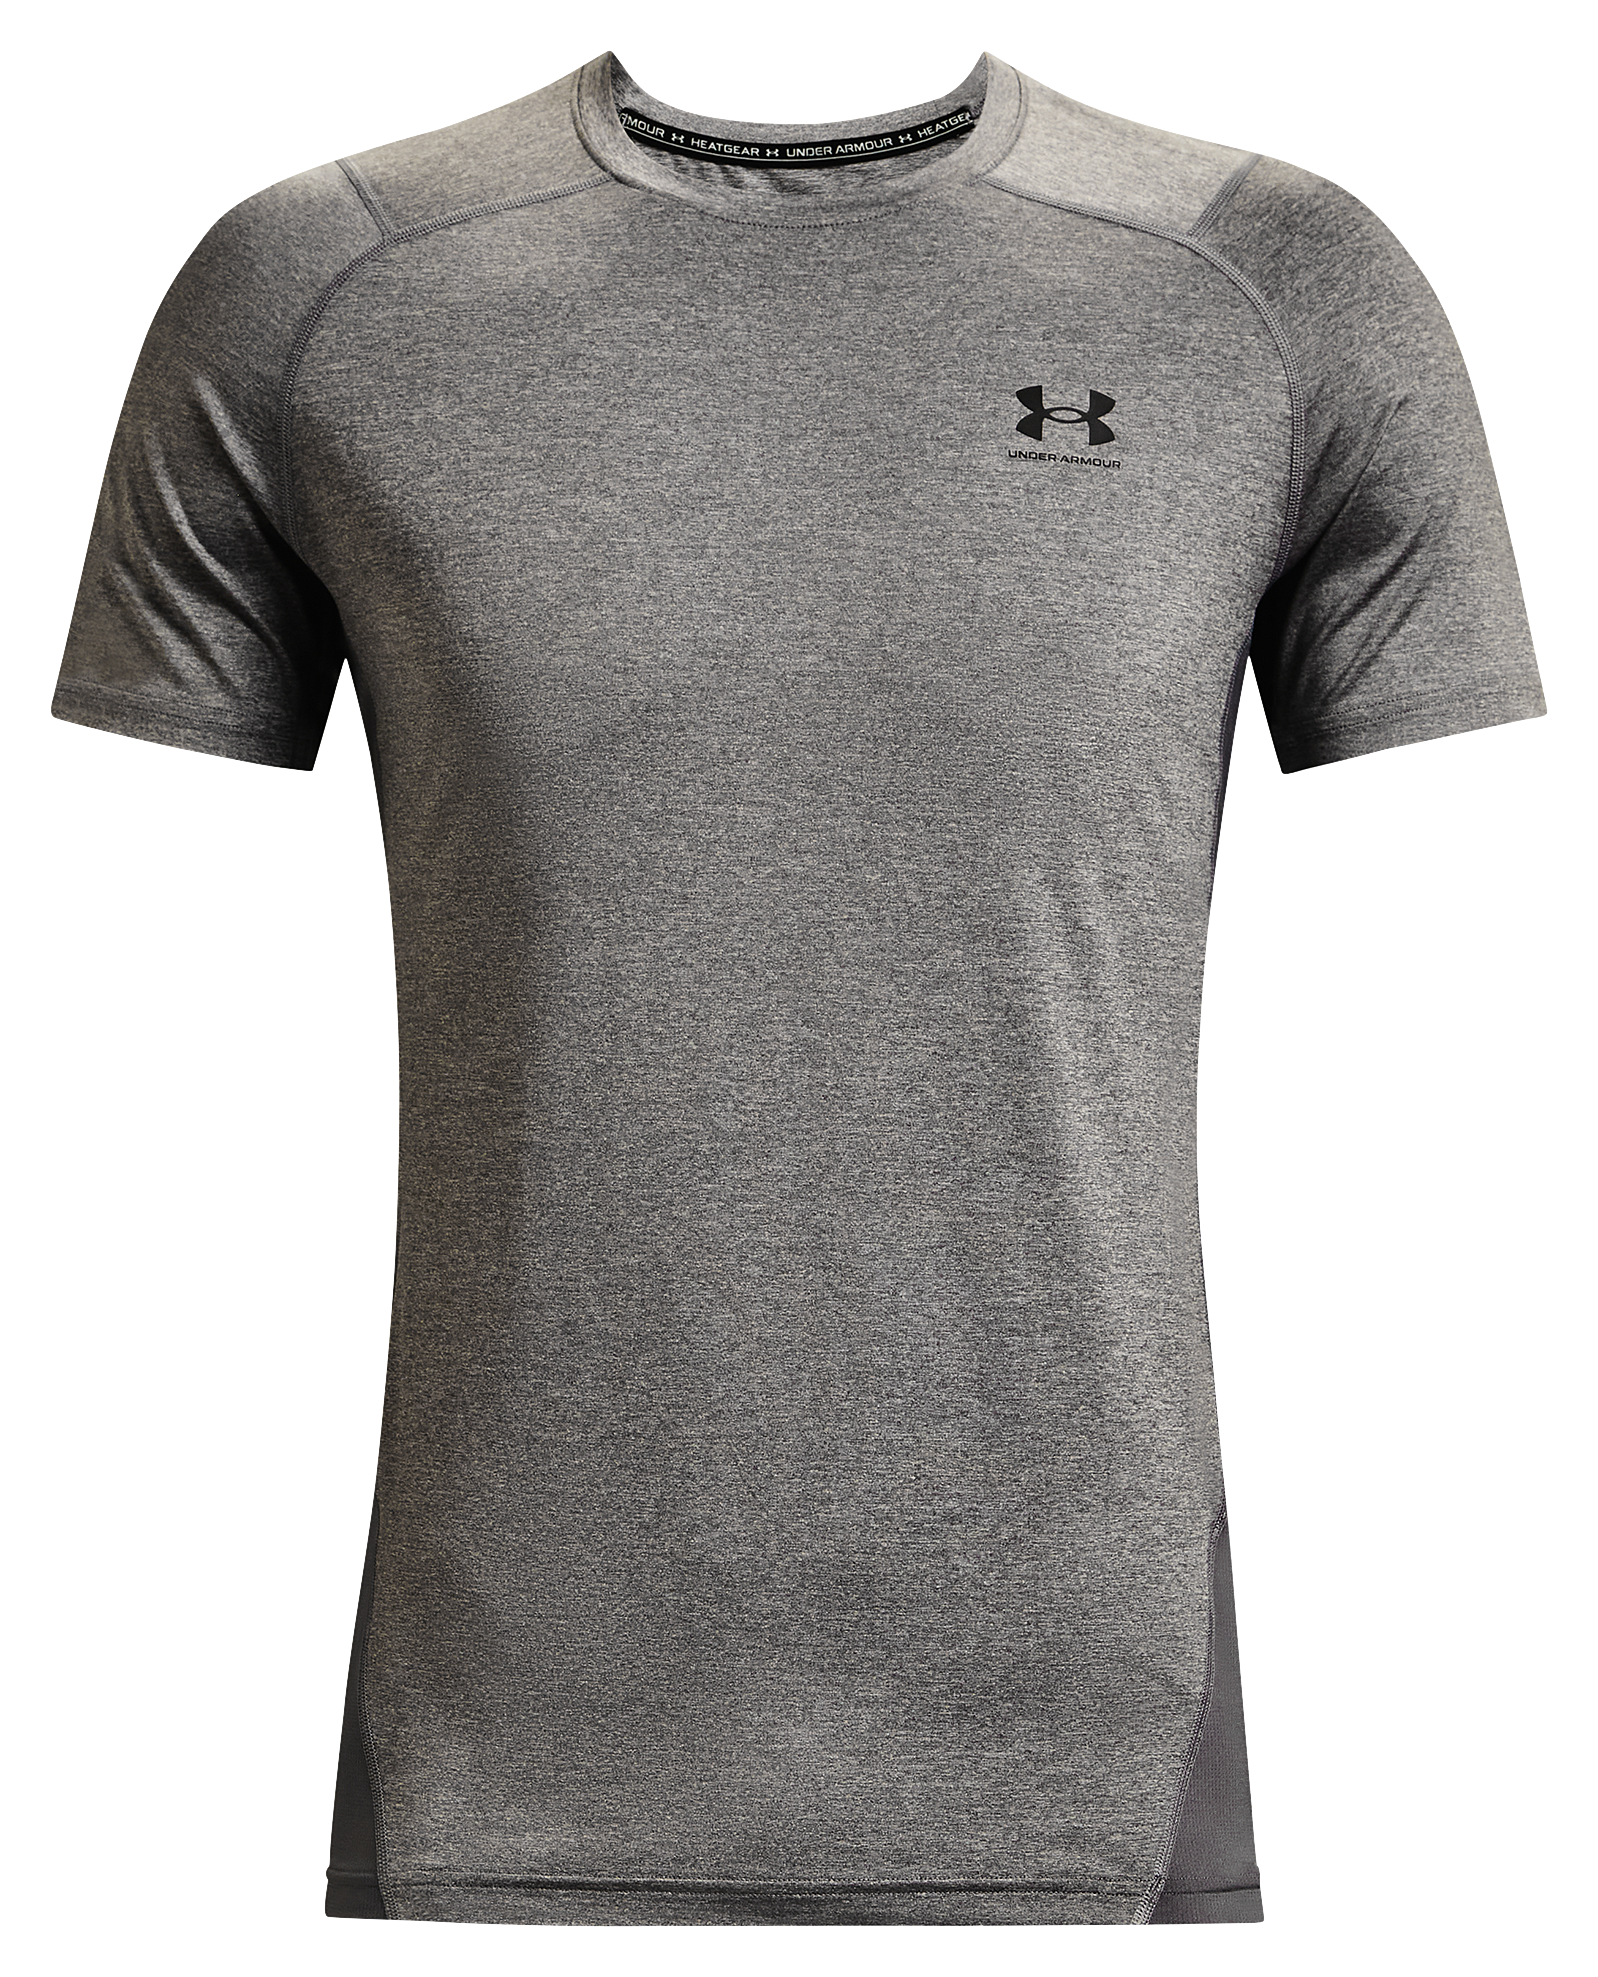 Under Armour HeatGear Fitted Short-Sleeve T-Shirt for Men - Carbon Heather - 4XL